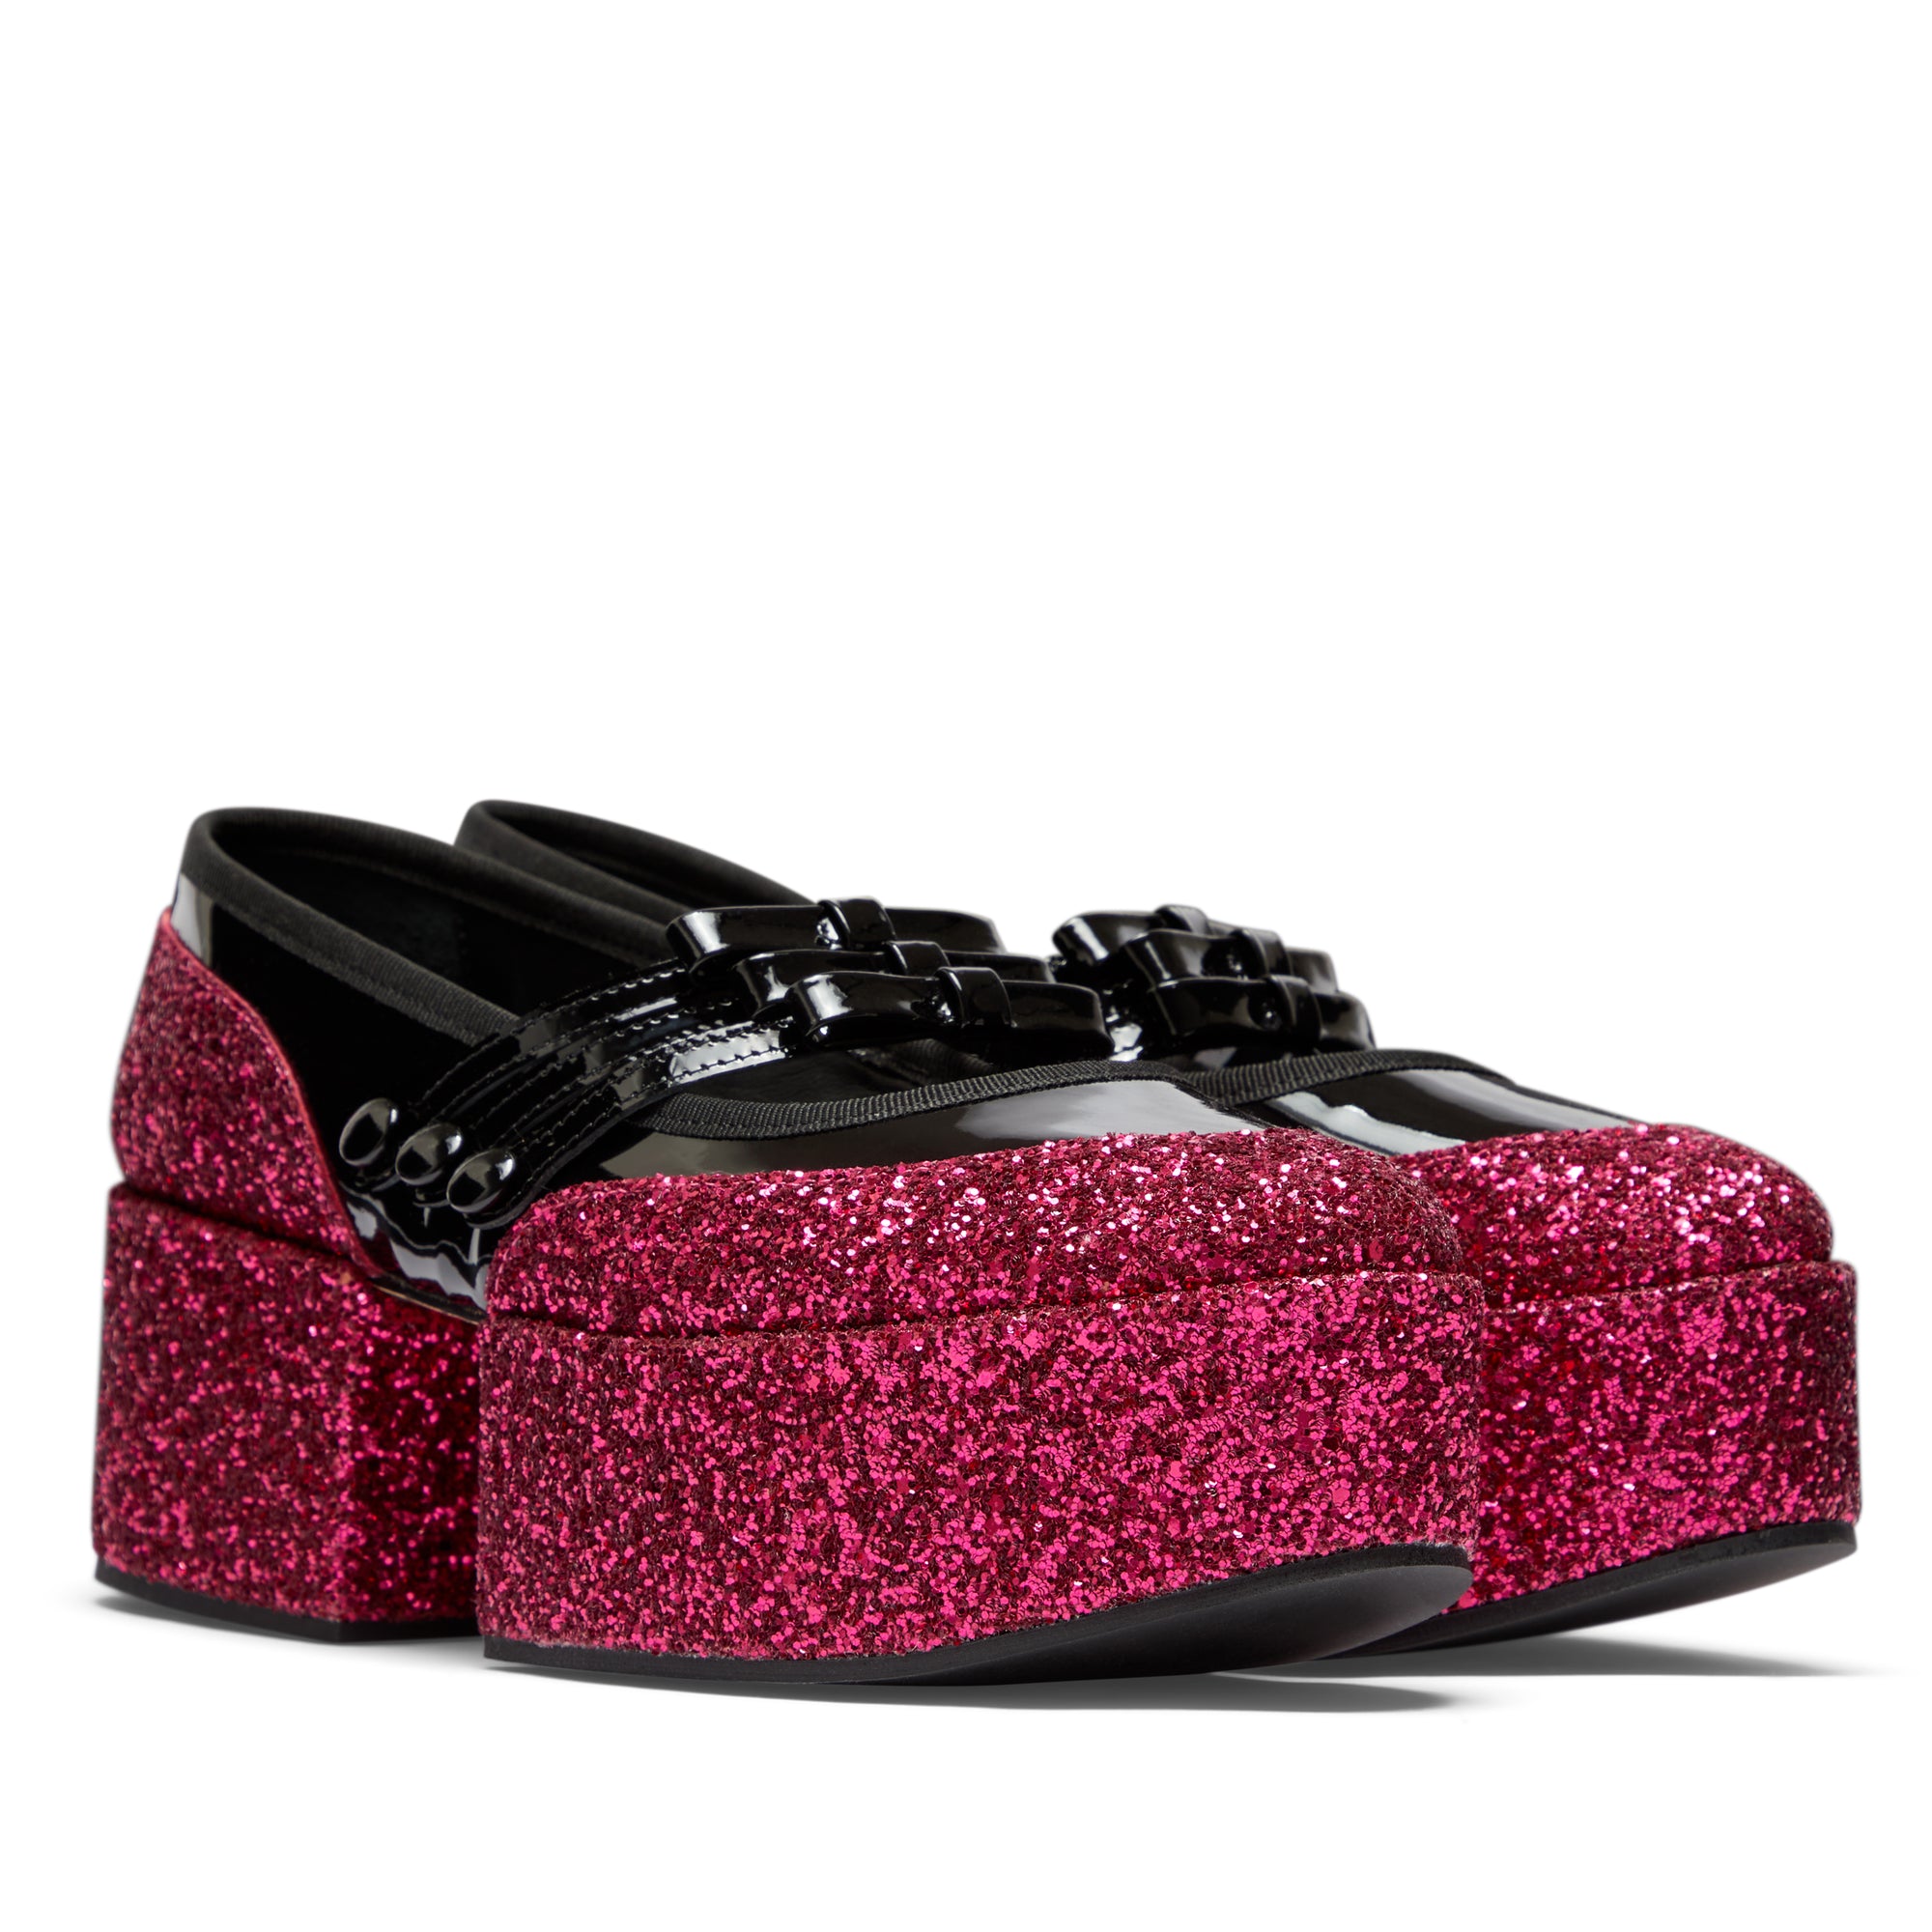 Noir Kei Ninomiya - Repetto Glitter Strapped Platform Mary Janes - (Black/Pink) view 3